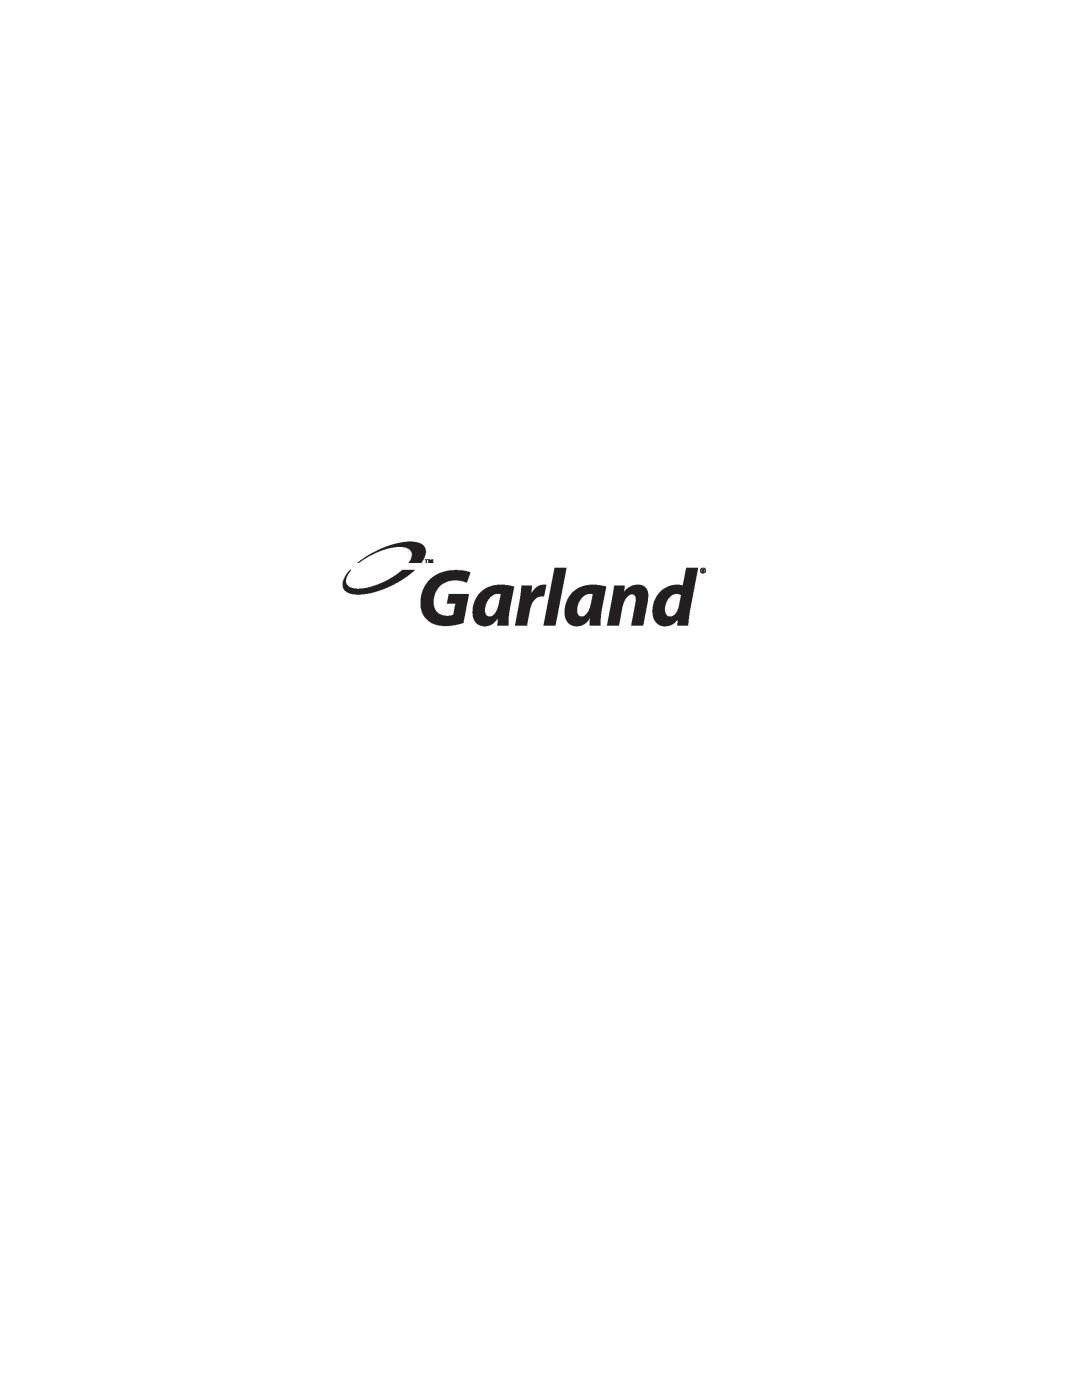 Garland SS680, SU680 operation manual 